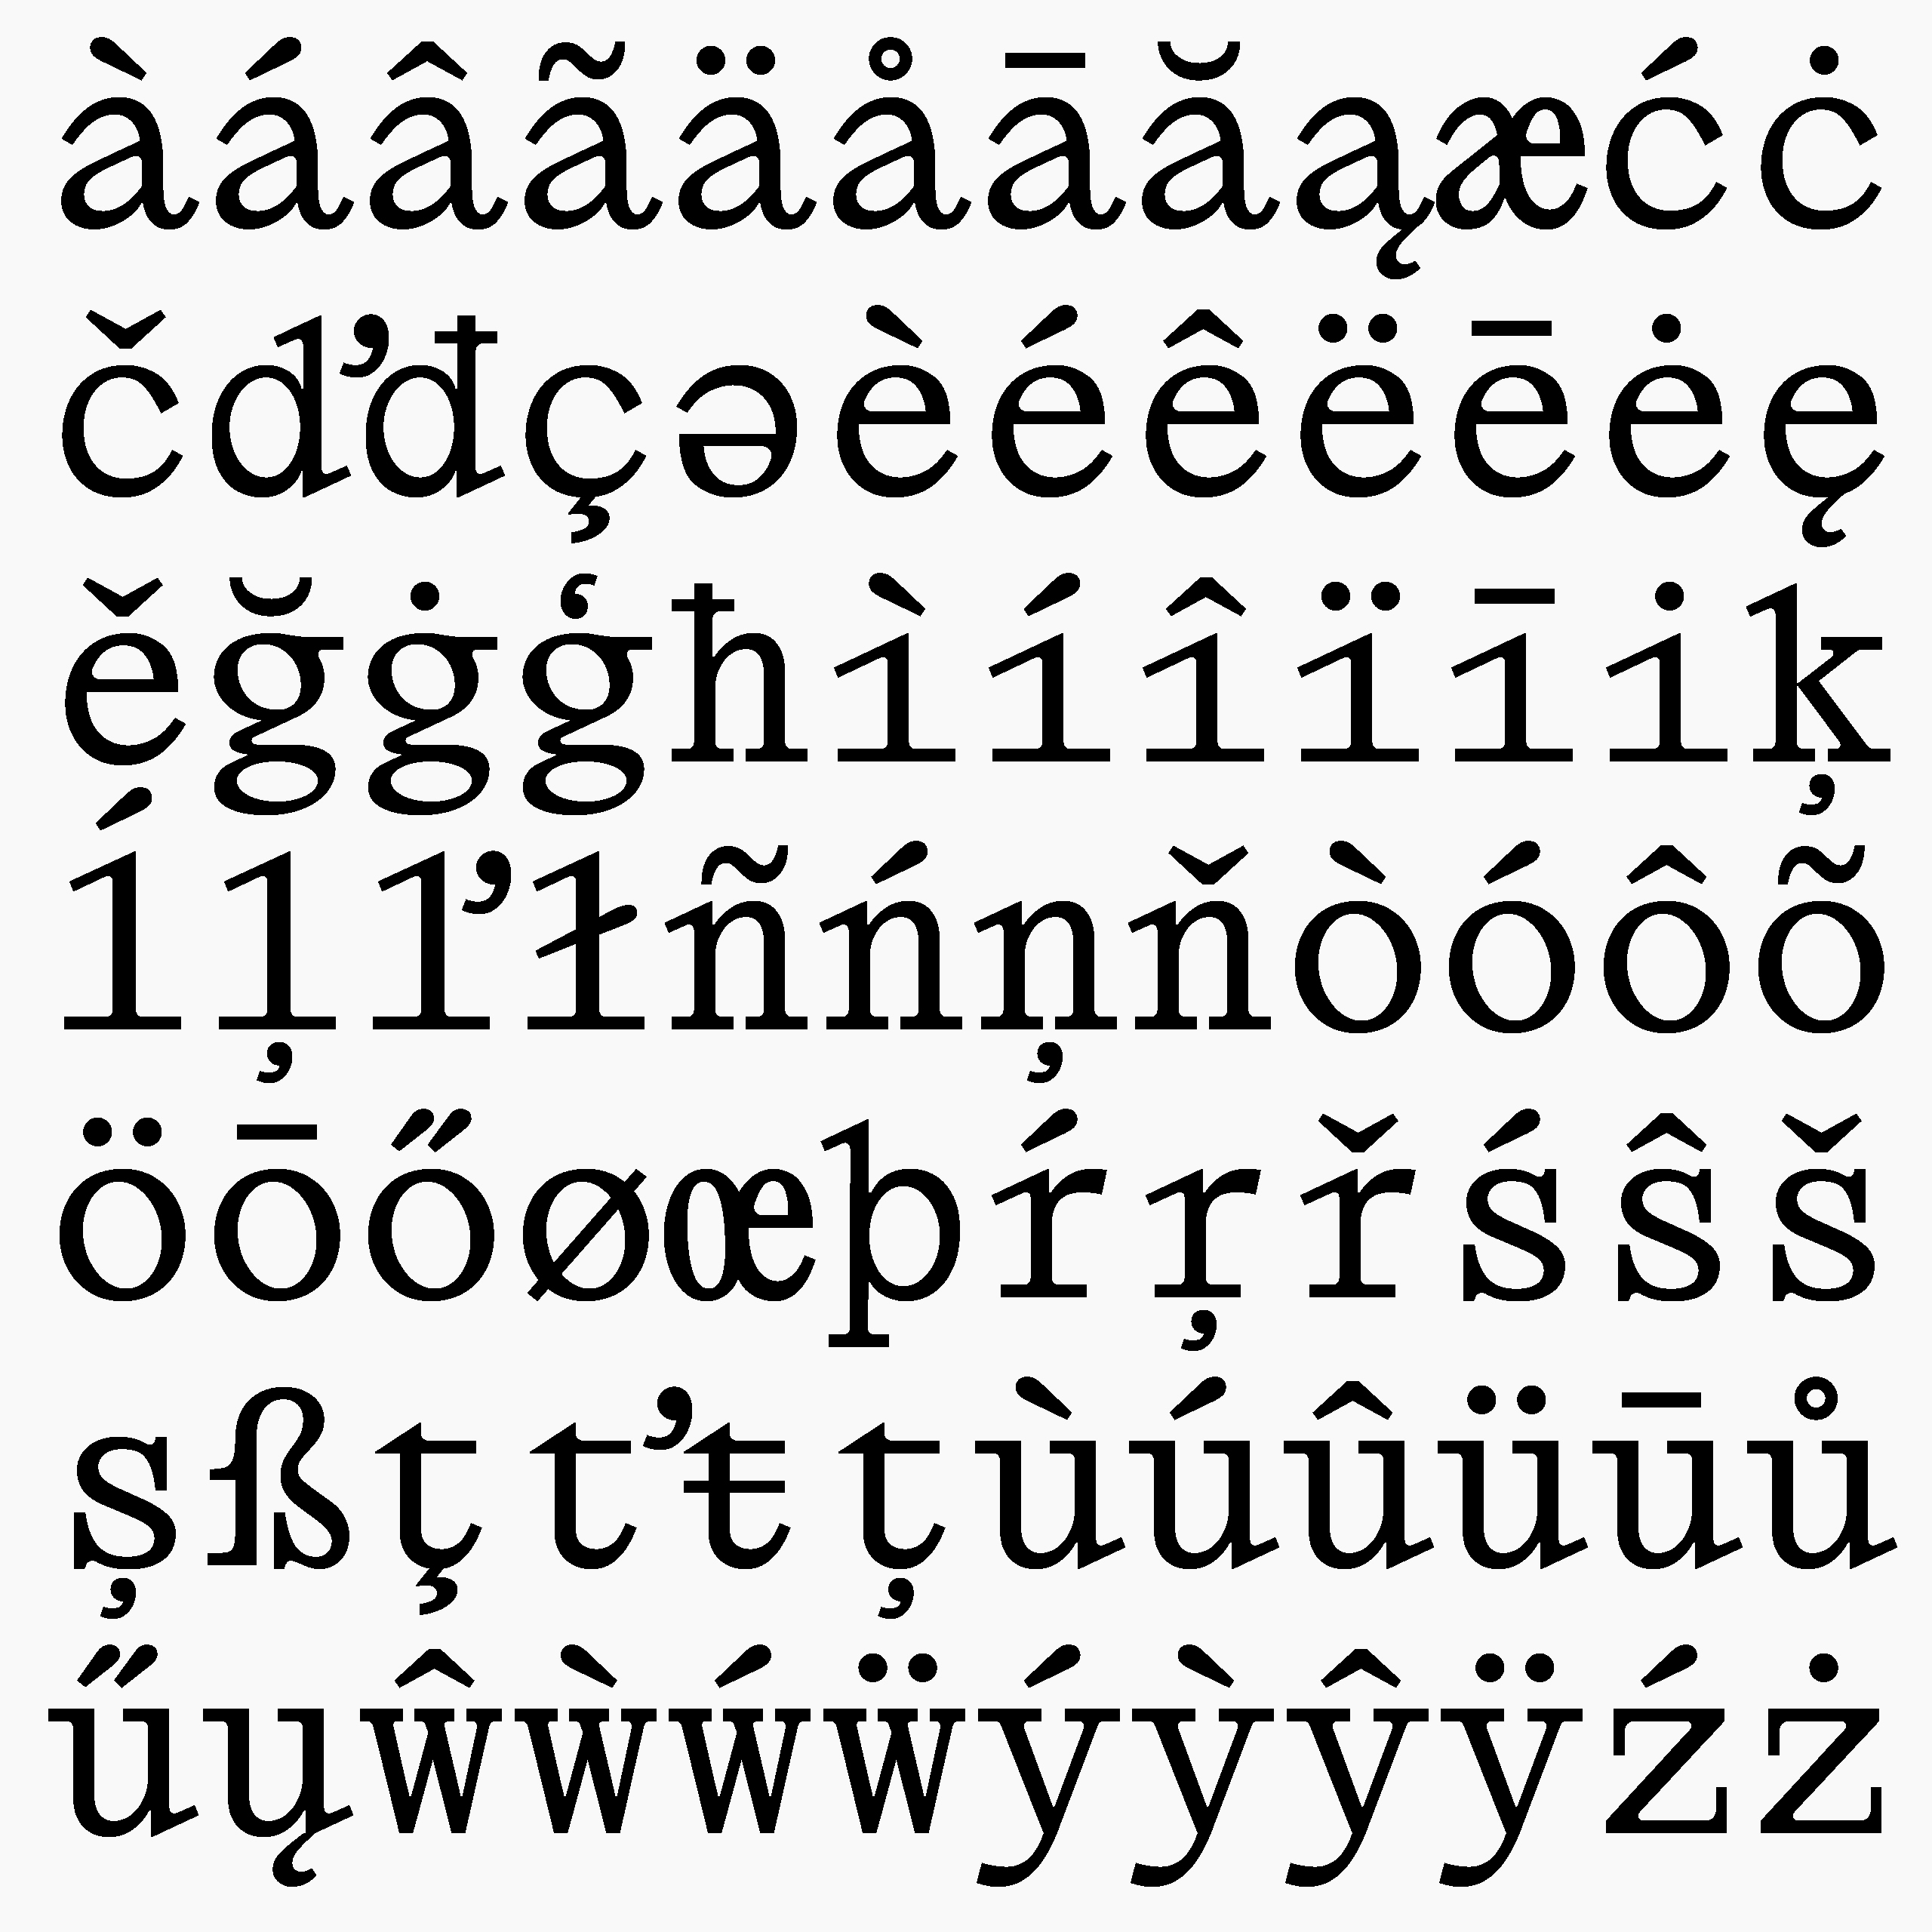 Daniel-Stuhlpfarrer_typedesign_graphicdesign_custom-font_custom-typeface_typography_Ju-Schnee-interdisciplinary-artist_07